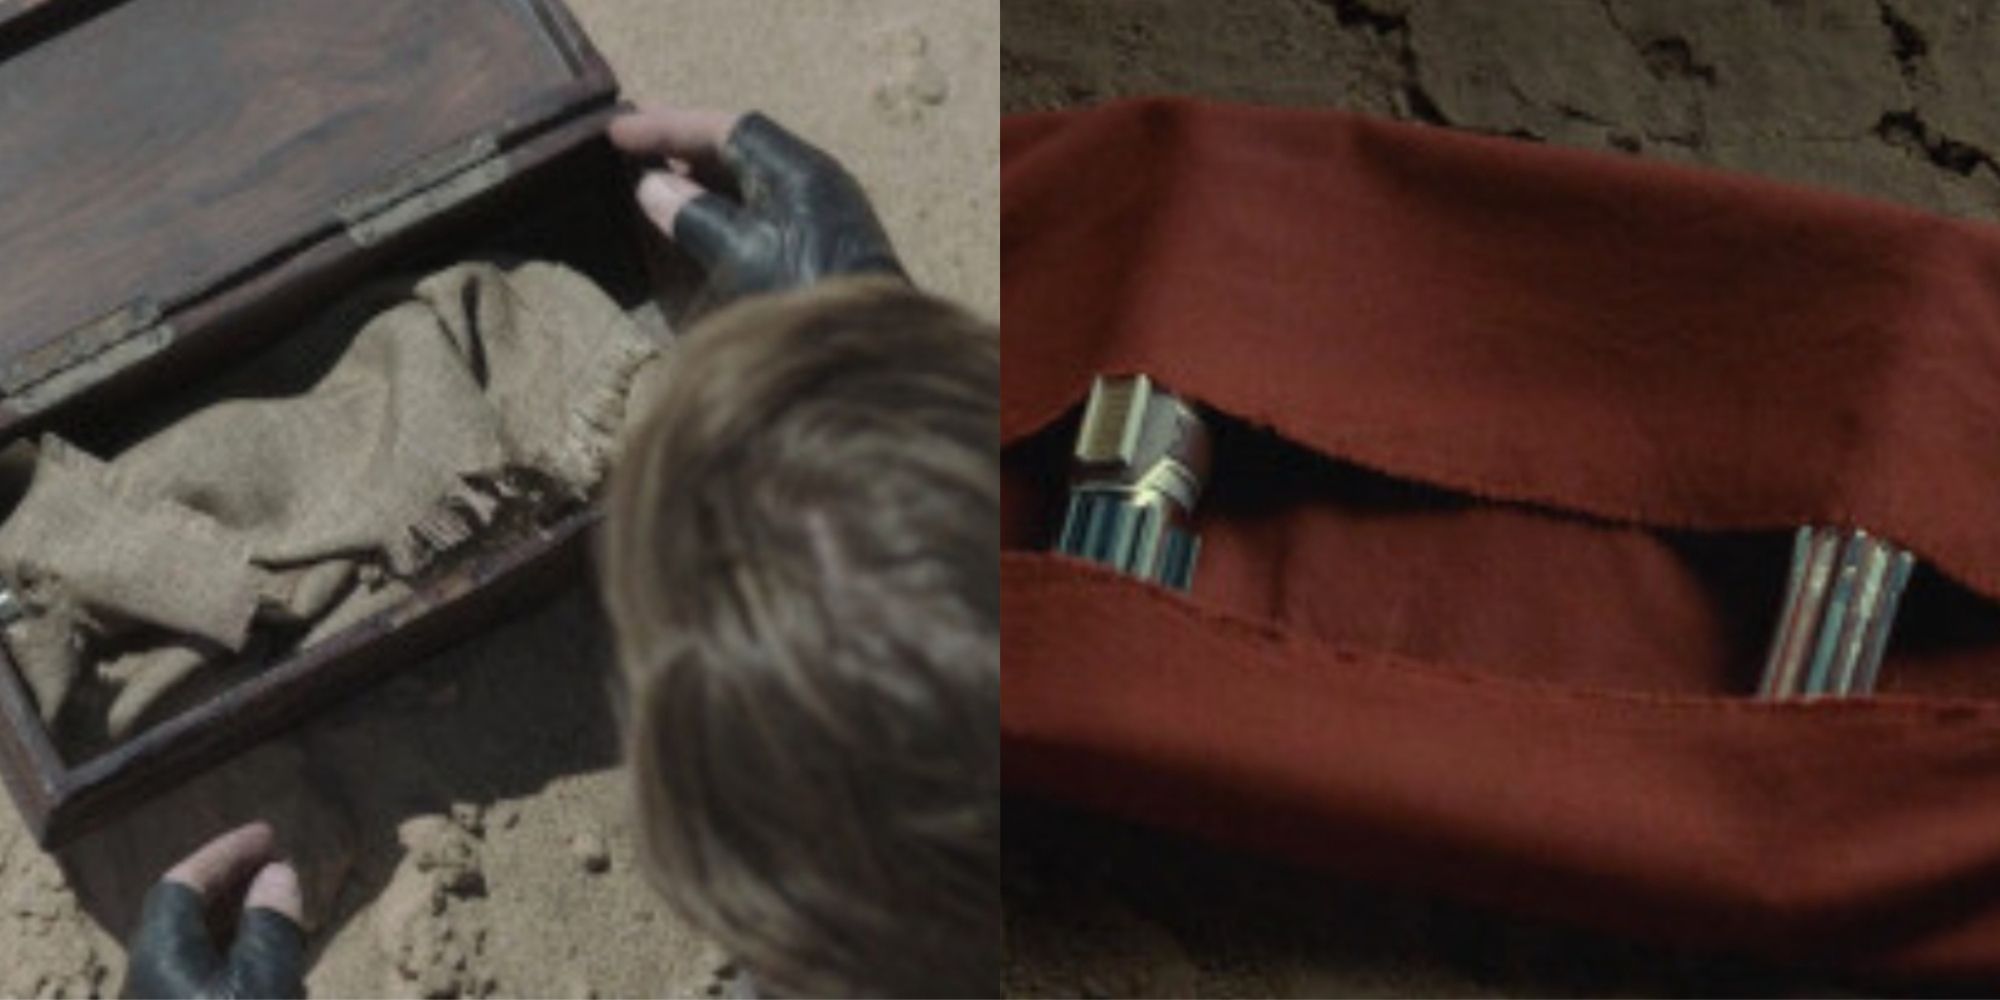 Split image of lightsabers buried in the desert in Obi-Wan Kenobi and lightsabers buried in the desert in Star Wars: The Rise of Skywalker